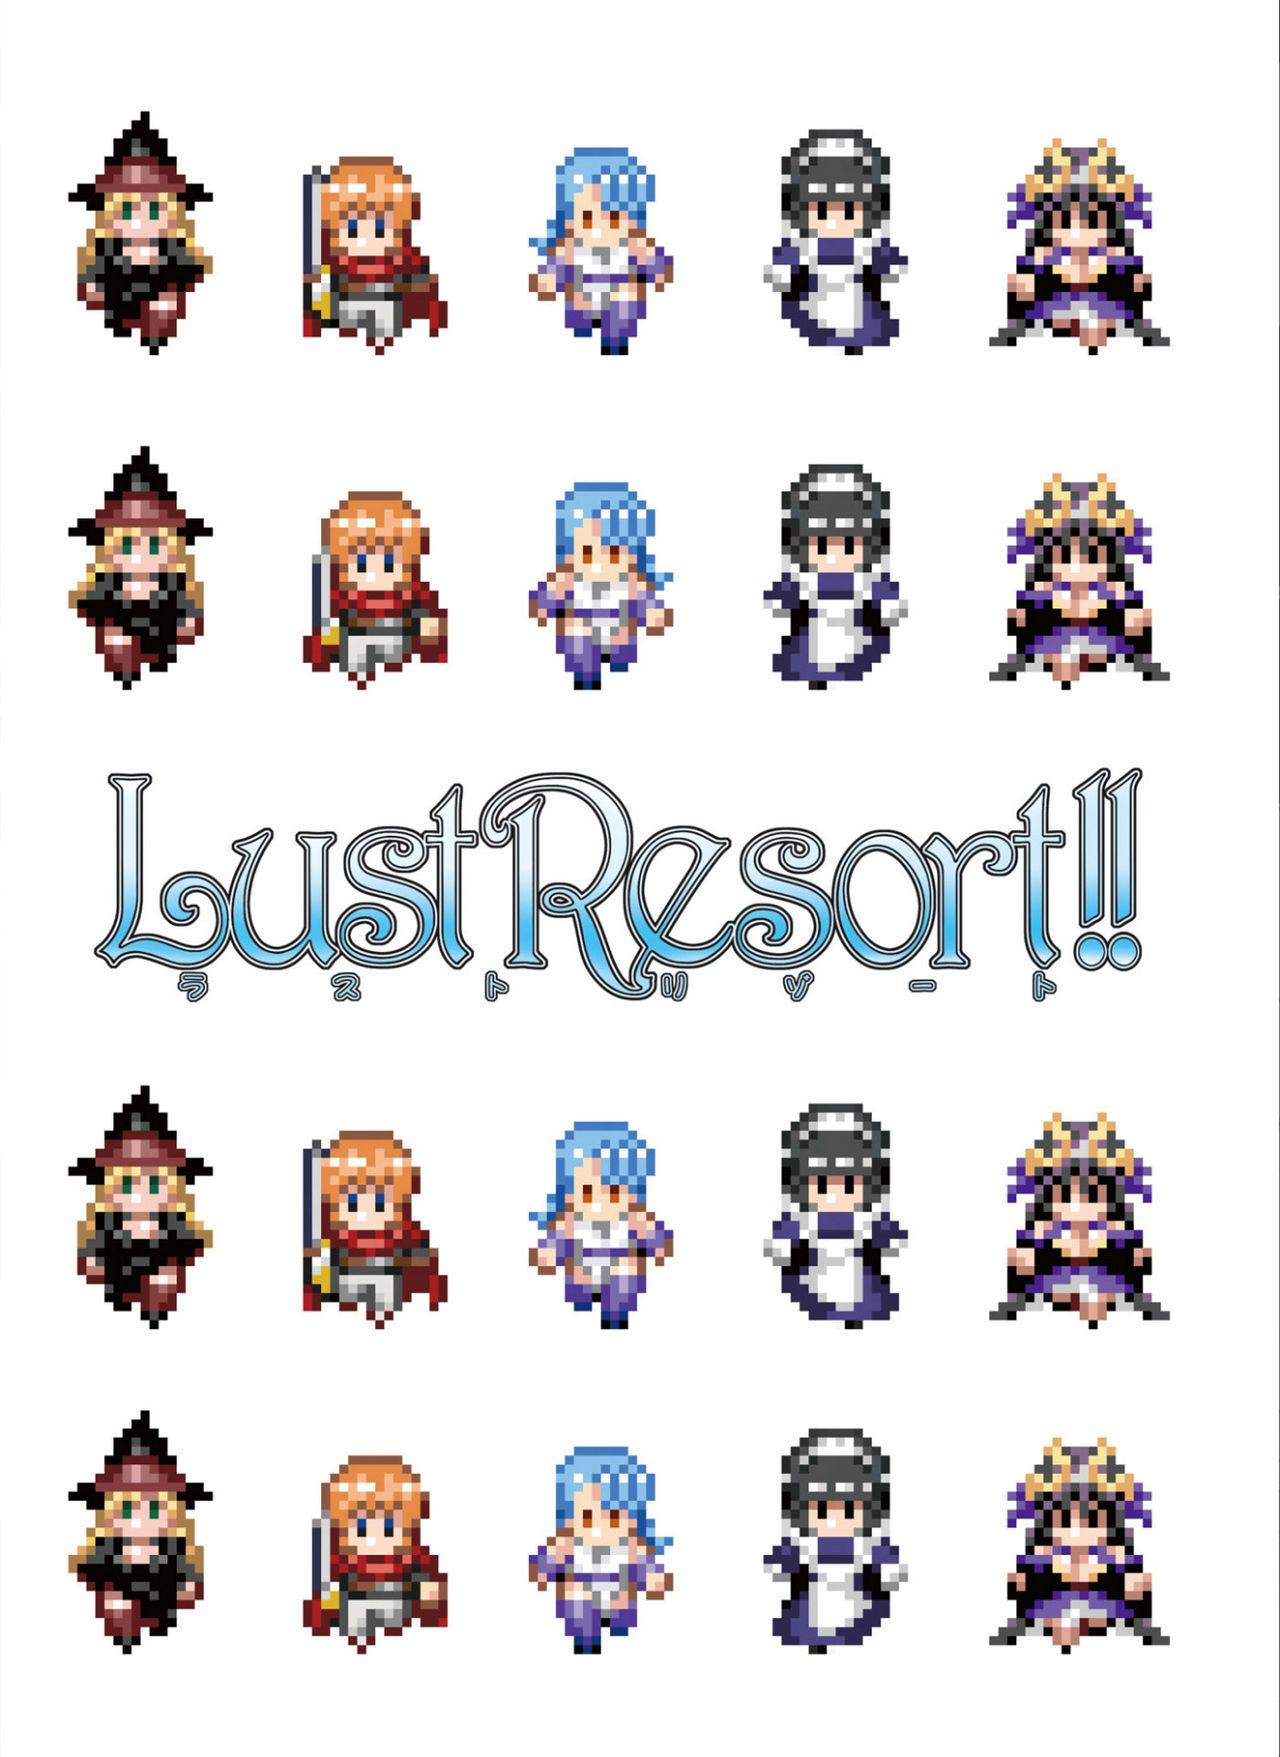 Lust Resort!! Tokubetsu Genteiban 177